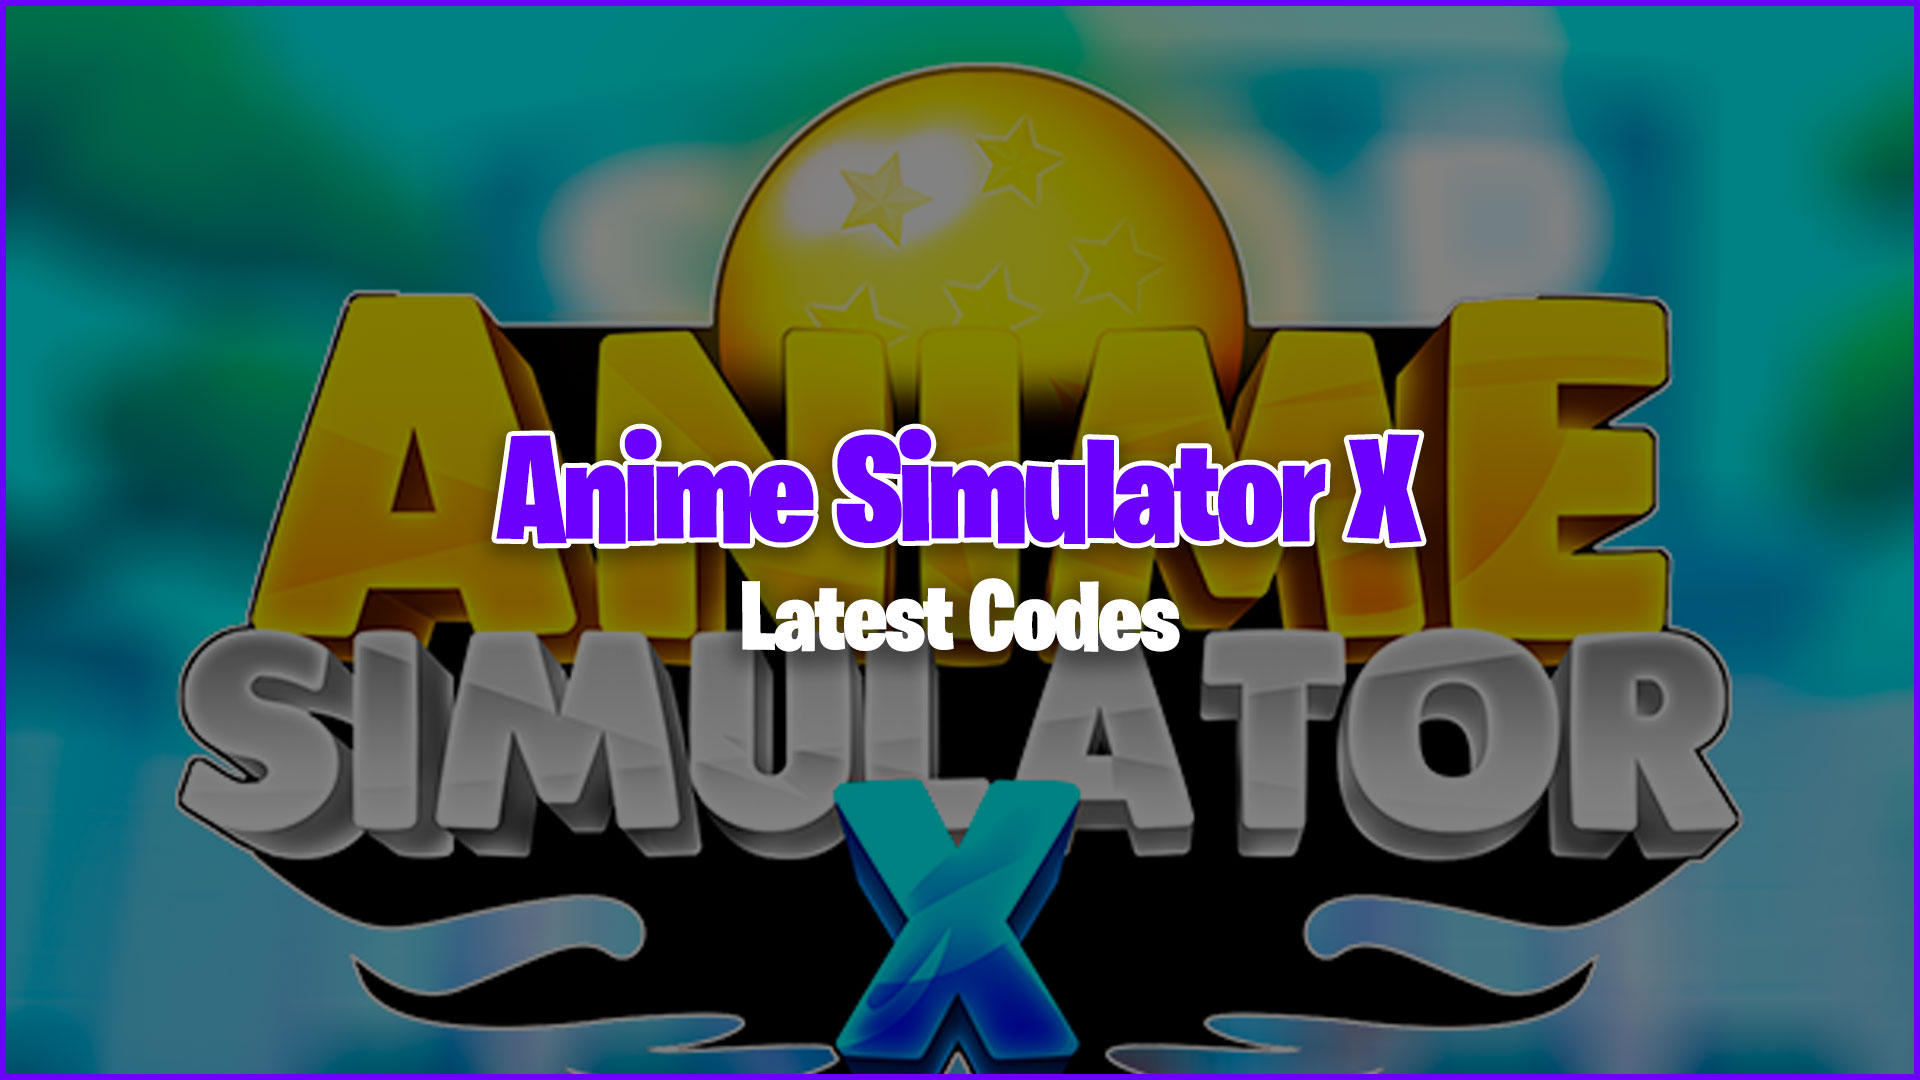 Roblox - Anime Fighting Simulator X Codes (December 2023)